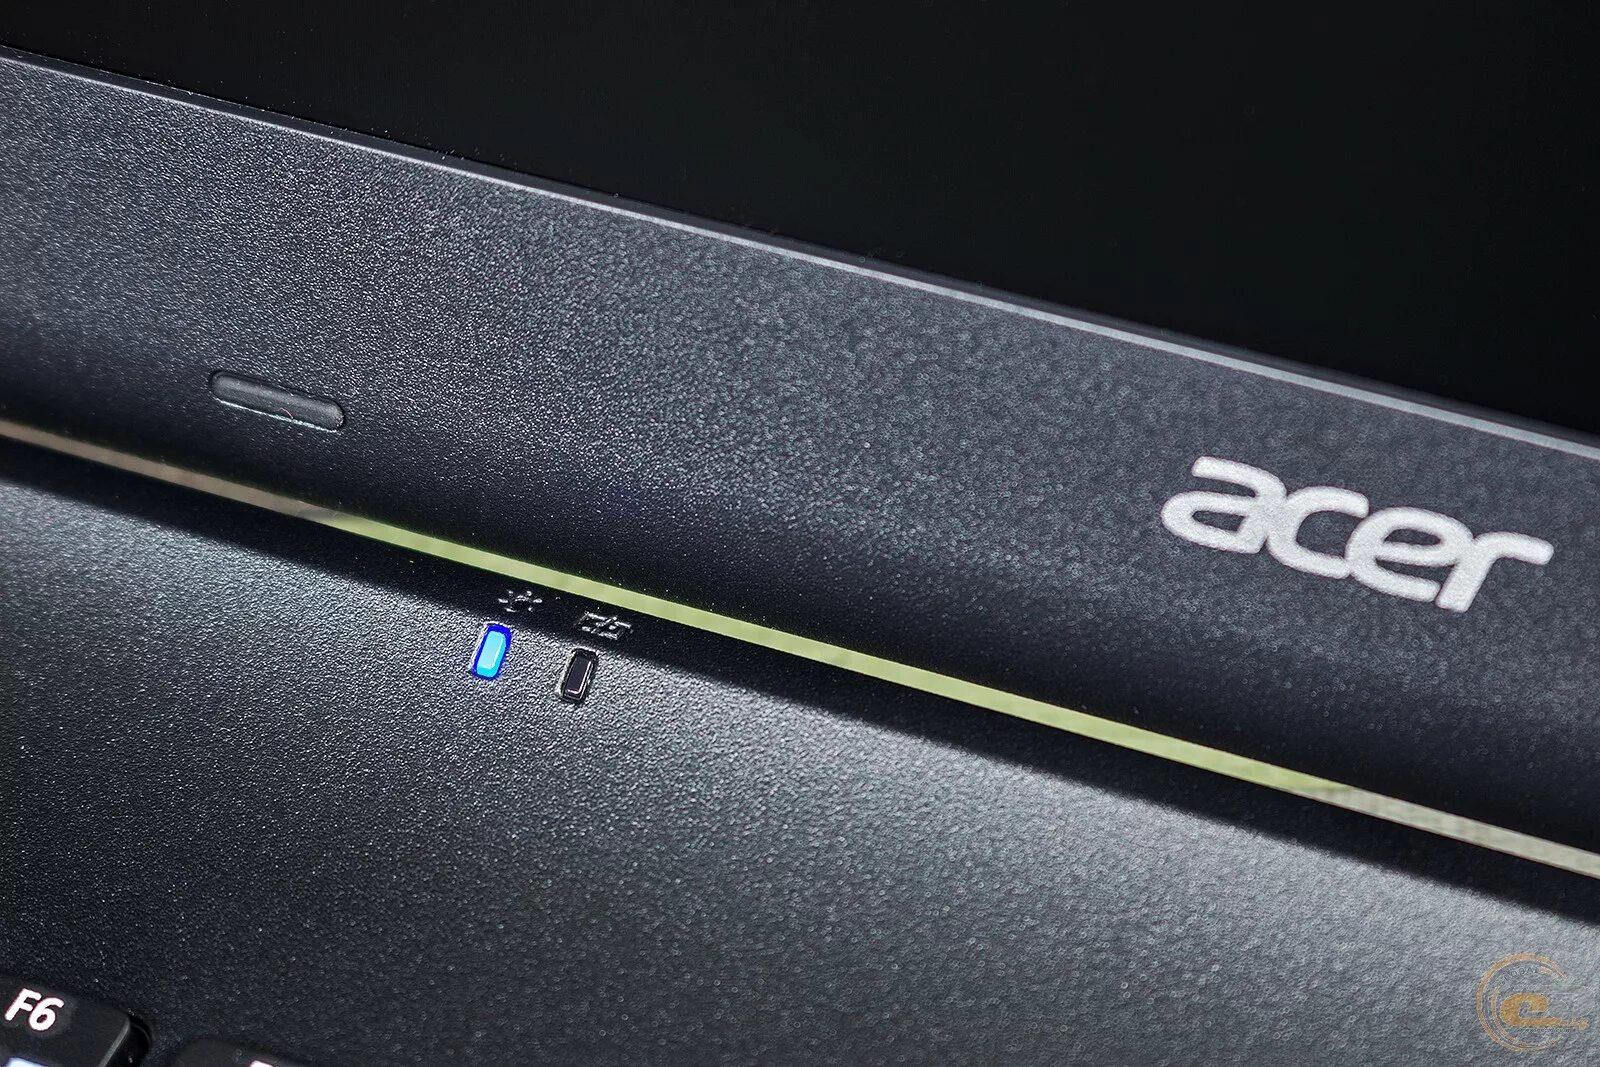 Acer Aspire e15 start. Acer Aspire e15 es1. Acer Aspire 3 индикаторы. Индикаторы на ноутбуке Acer Aspire. Камера на ноутбуке асер